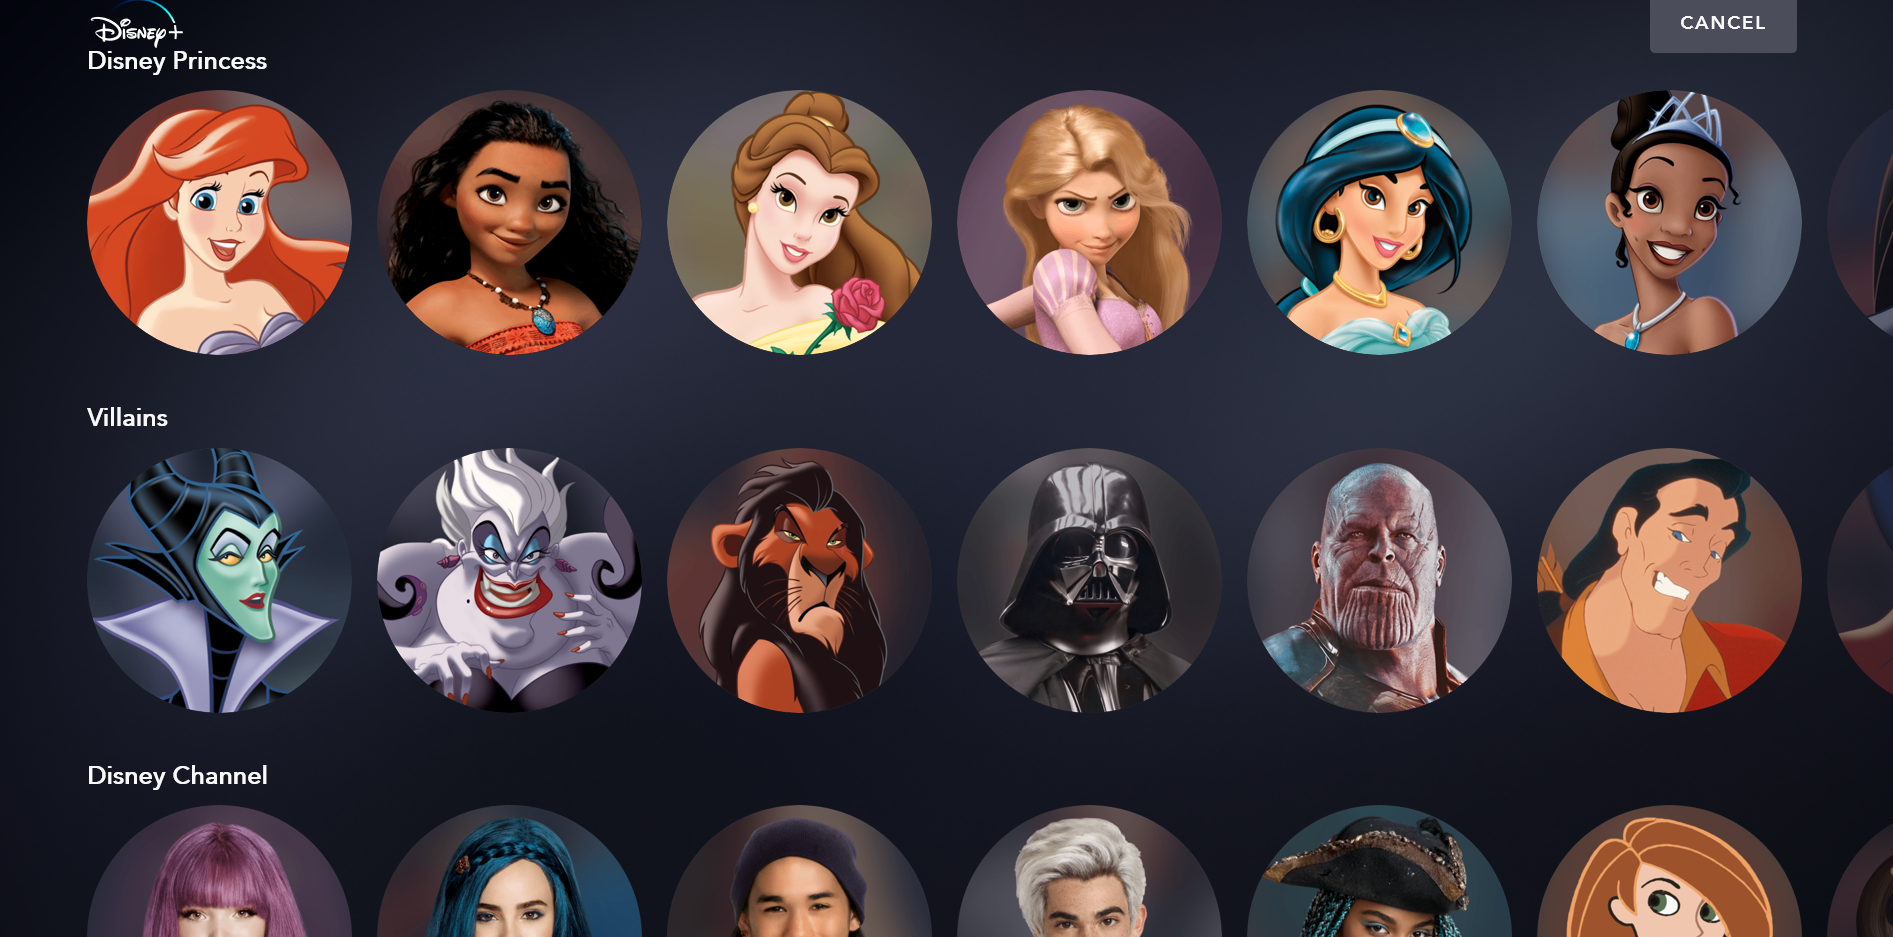 thanos avengers-memes thanos text: CANCEL Disney Princess Villains Disney Channel 